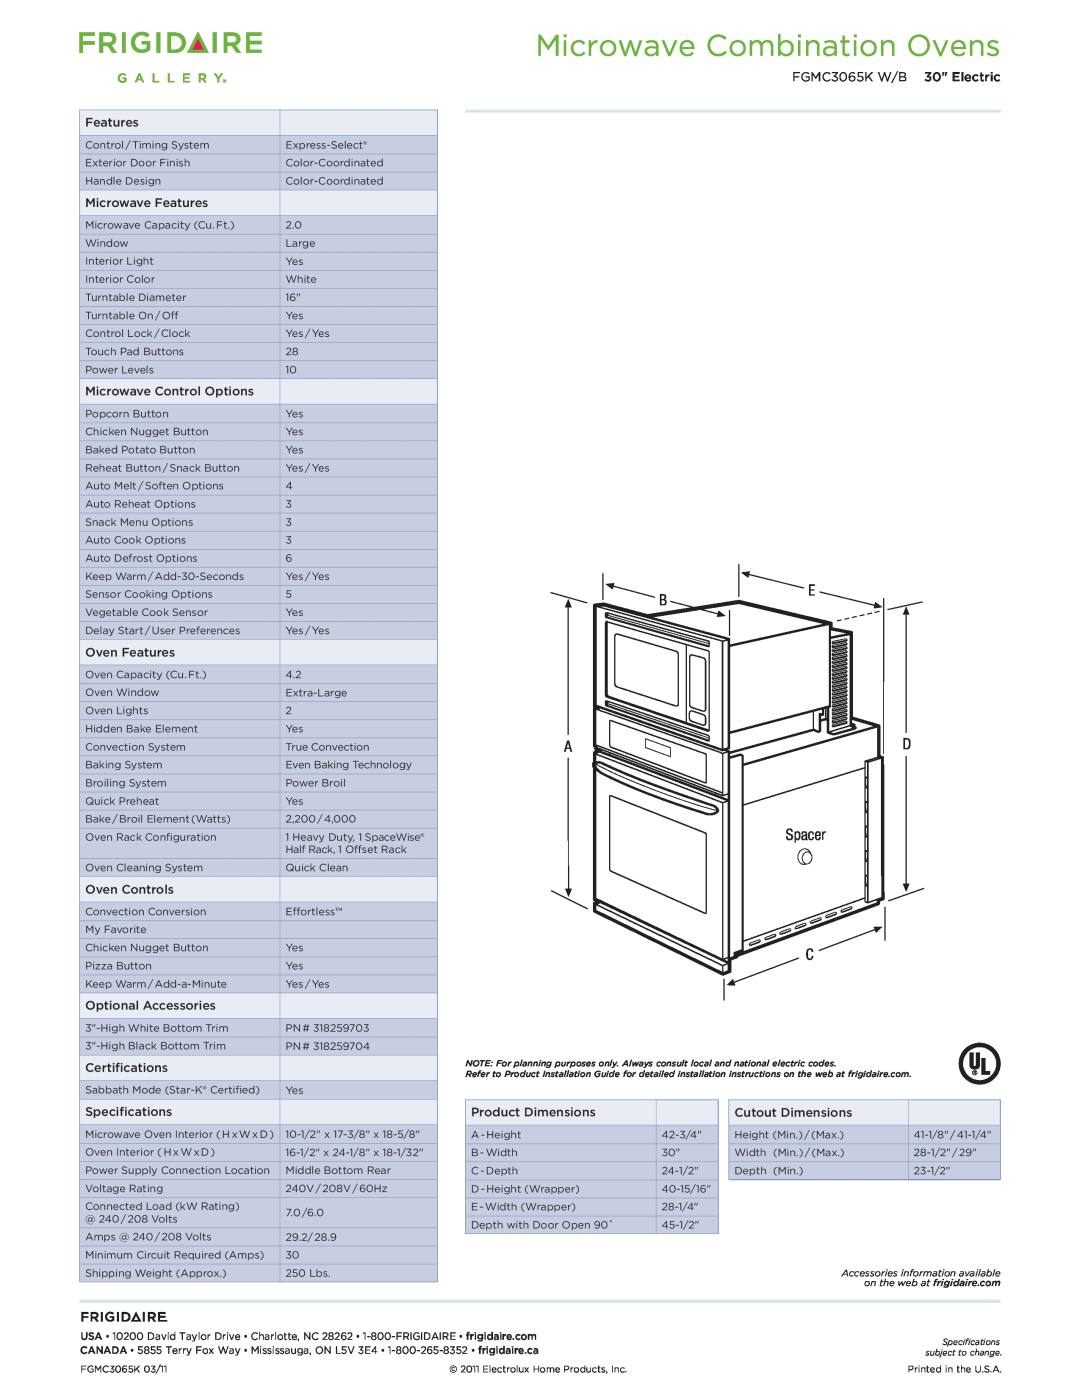 Frigidaire FGMC3065K W/B dimensions Microwave Combination Ovens, B E A D Spacer C 